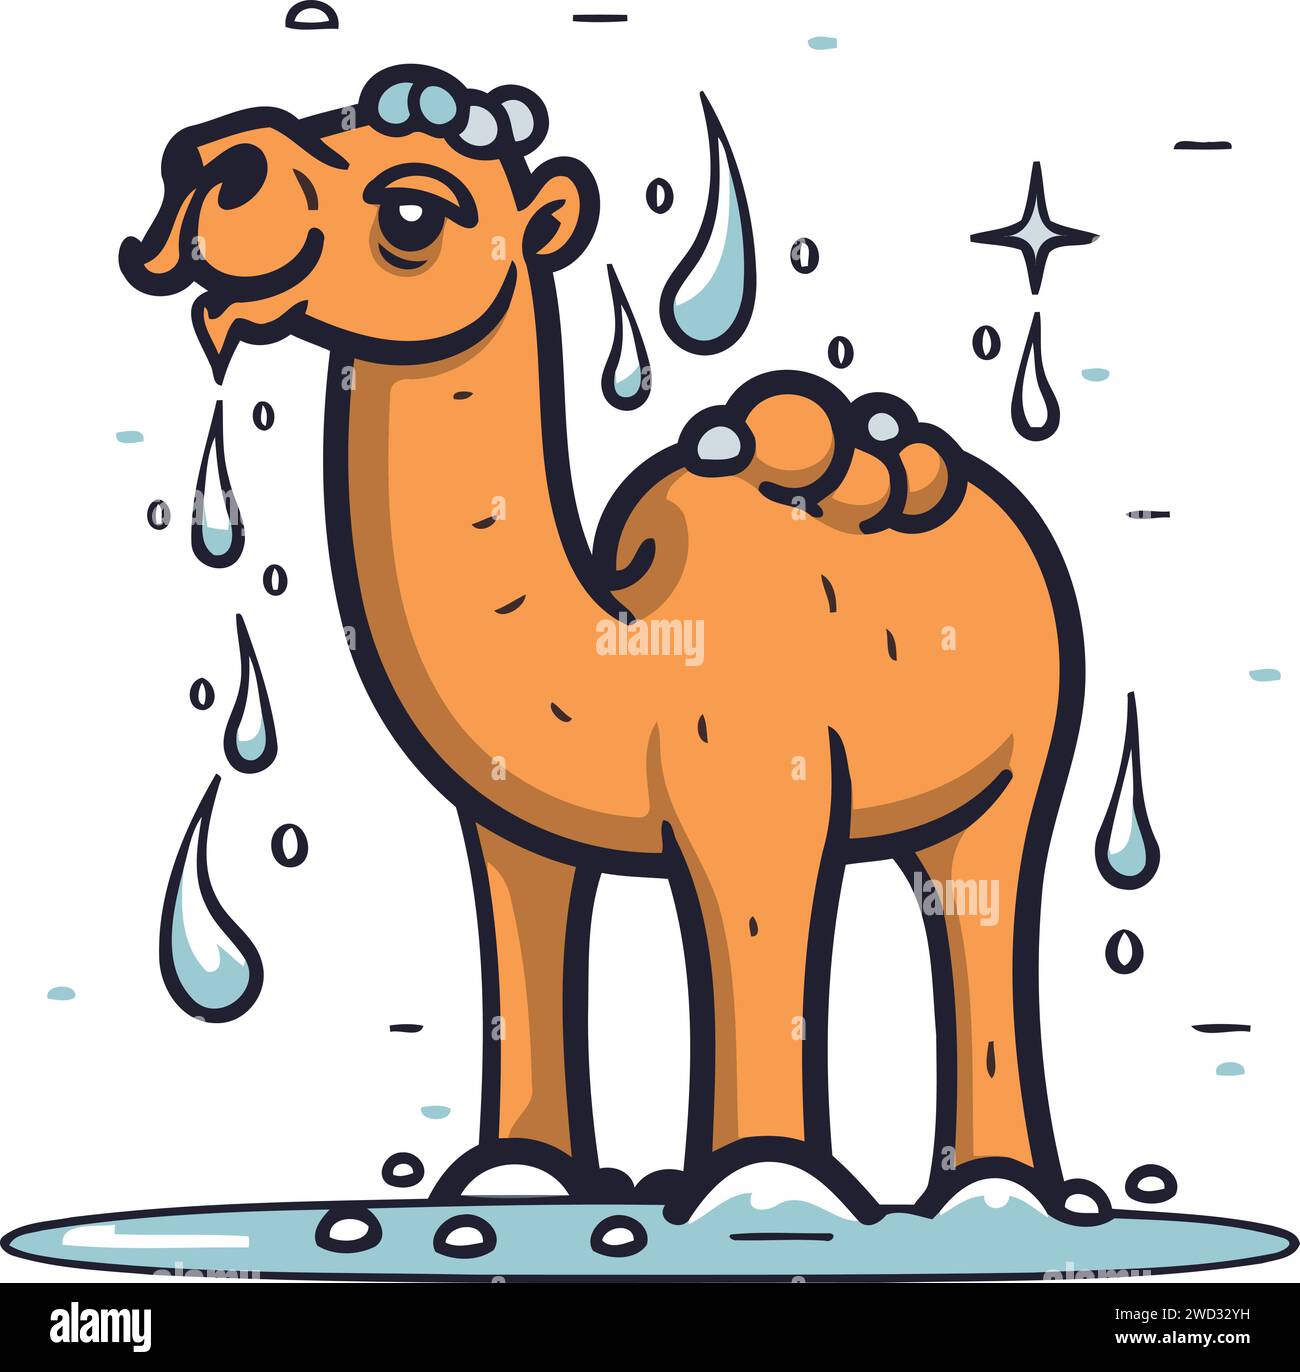 Cute camel with rain drops. Vector illustration in cartoon style. Stock Vector